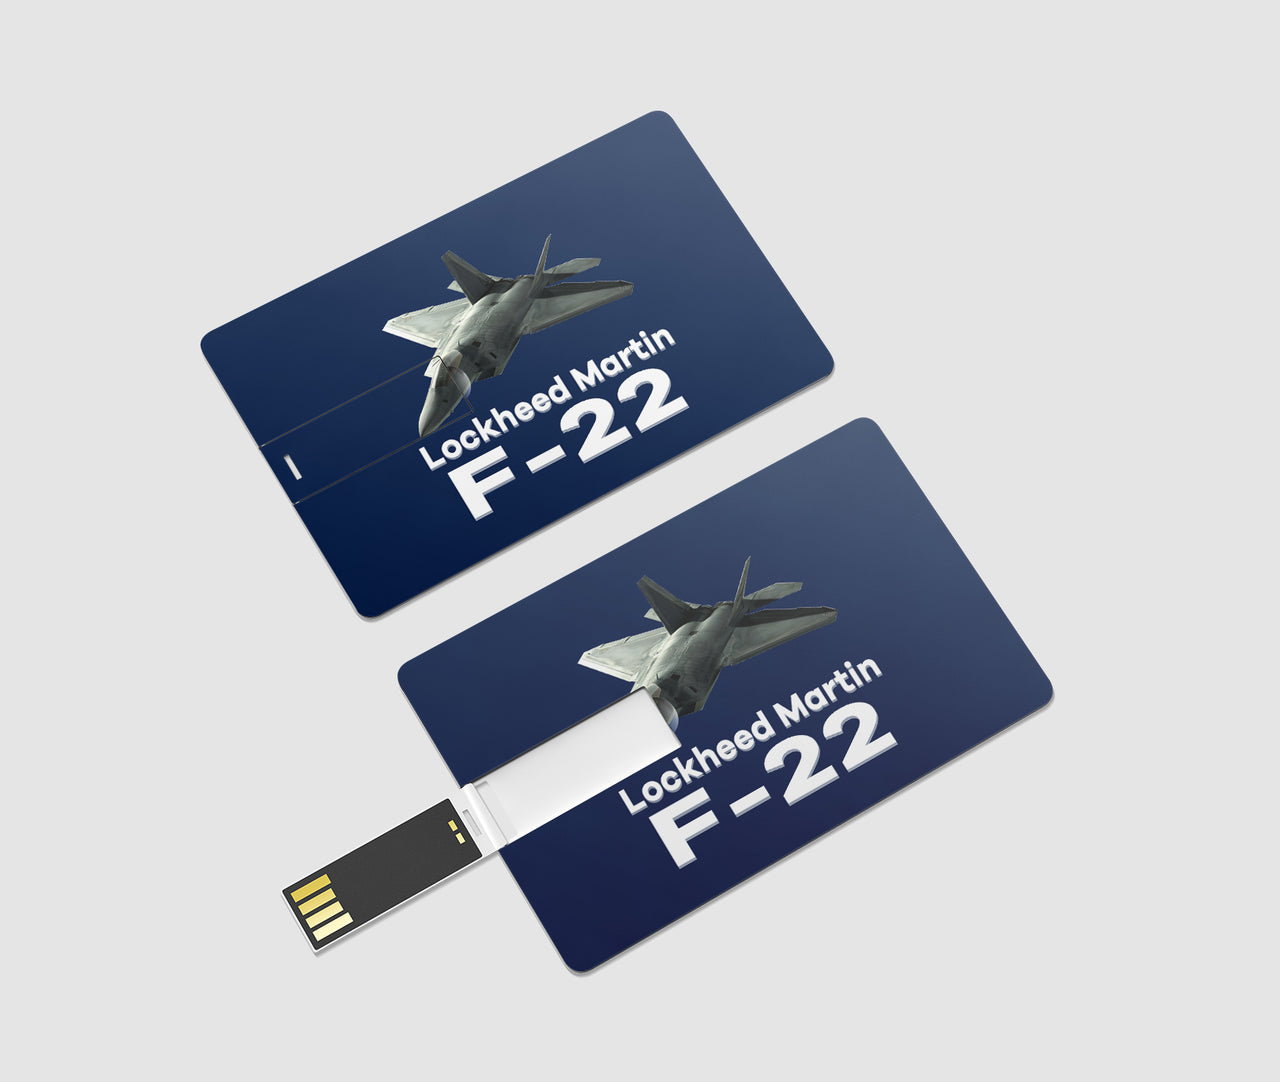 The Lockheed Martin F22 Designed USB Cards